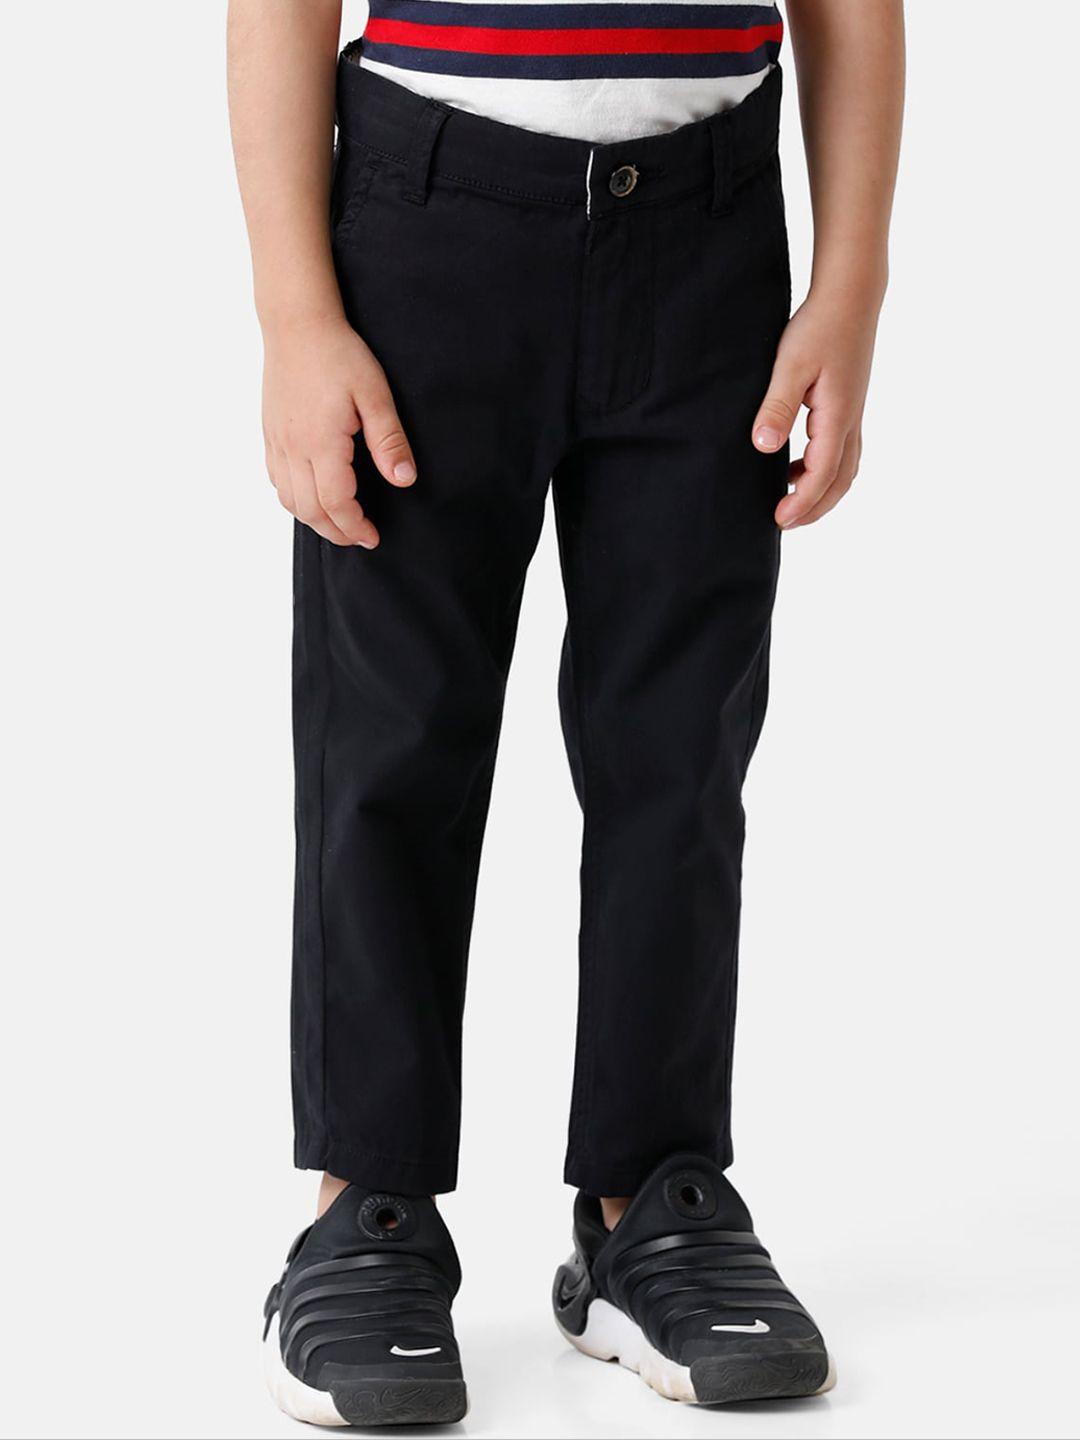 kate & oscar boys black cotton chinos trousers